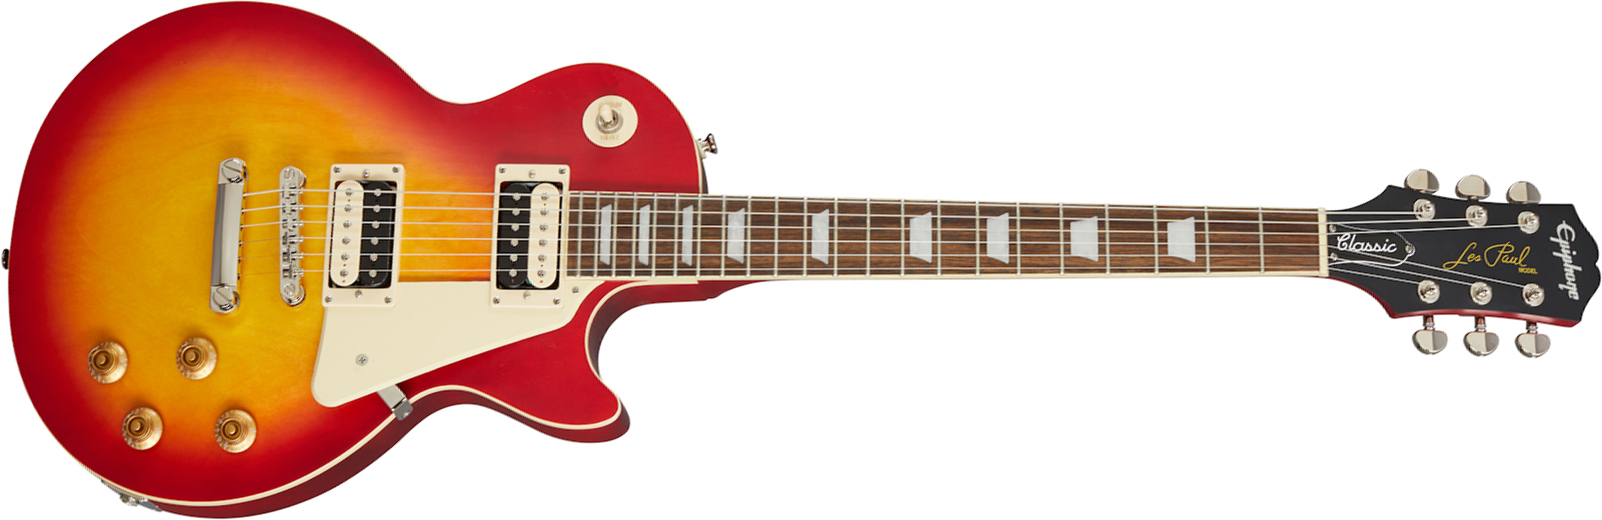 Epiphone Les Paul Classic Worn 2020 Hh Ht Rw - Worn Heritage Cherry Sunburst - Single cut electric guitar - Main picture